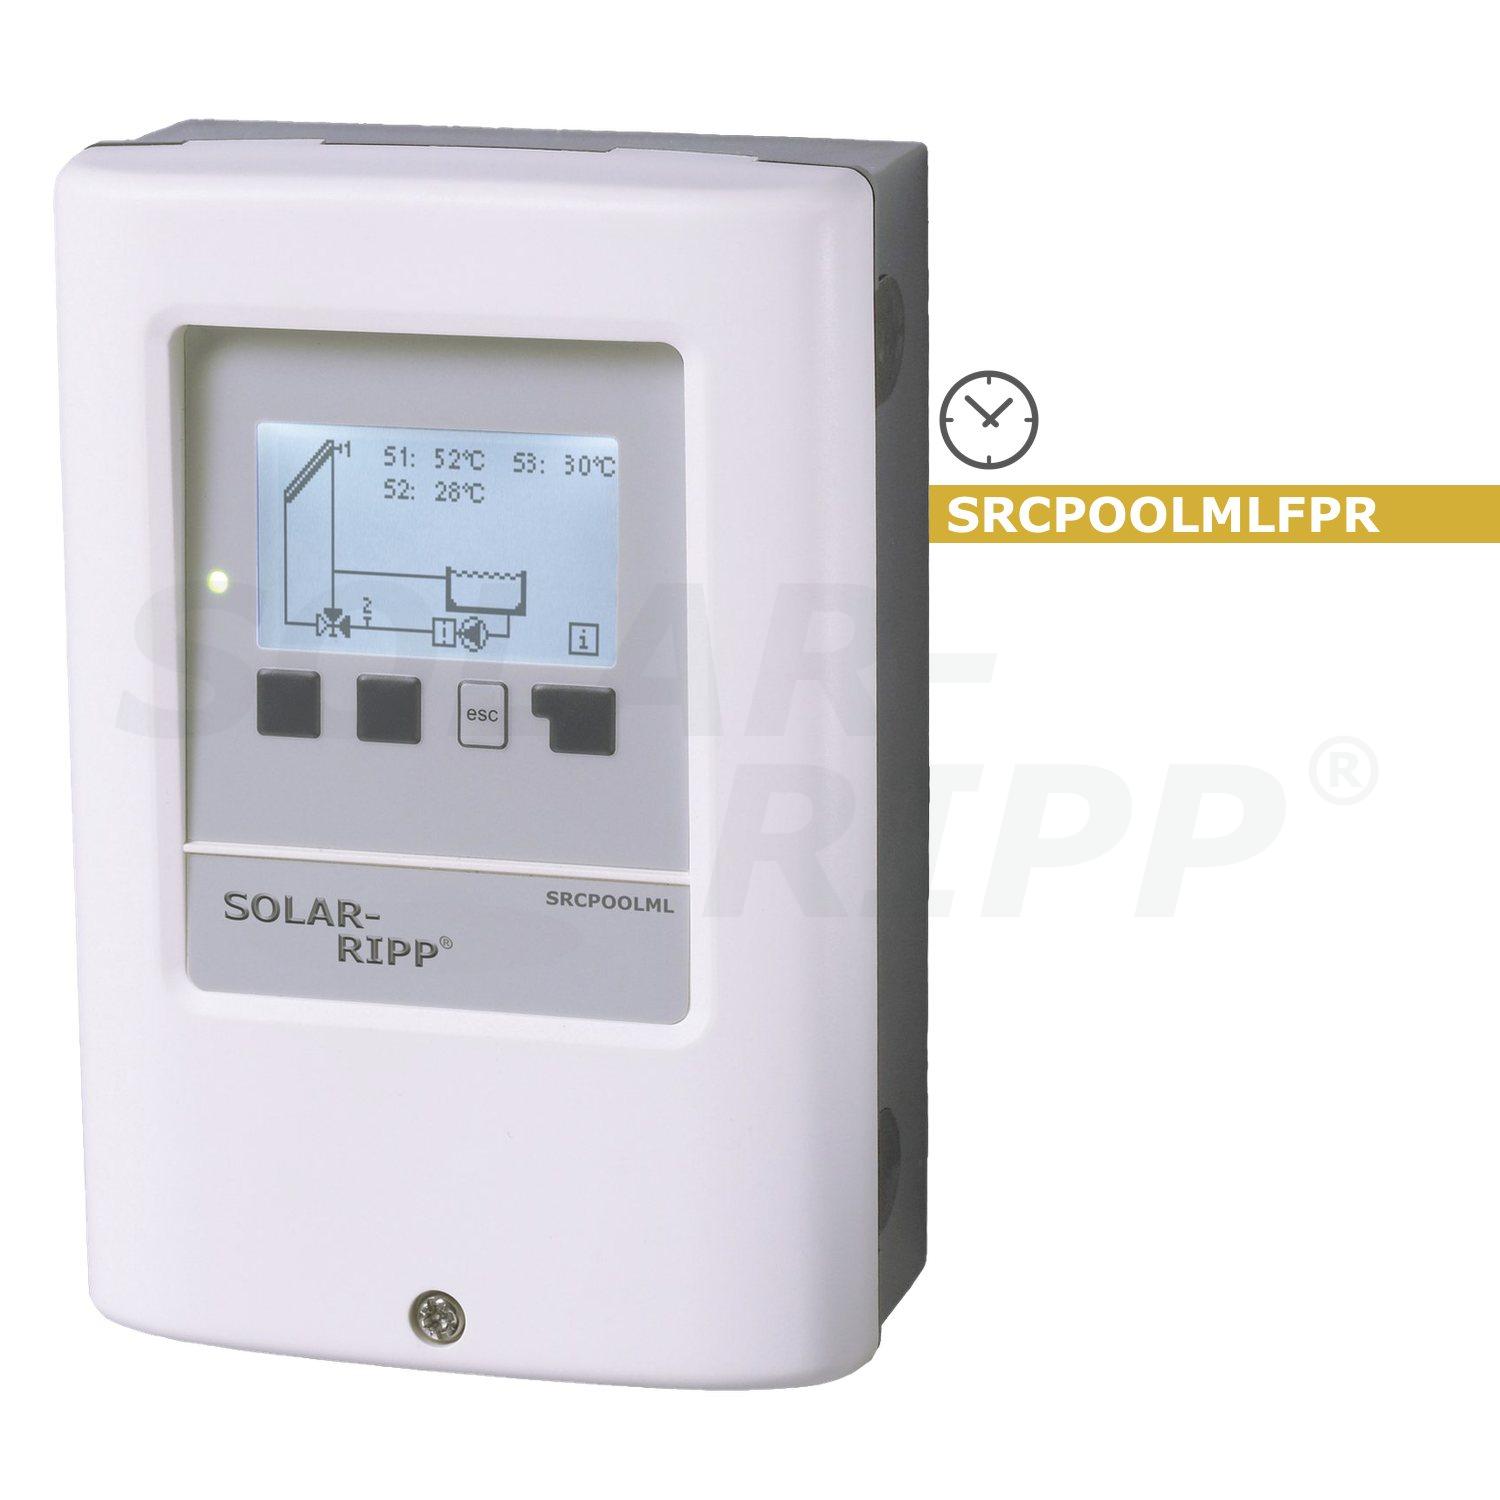 Controlador solar SOLAR-RIPP ® SRCPOOLMLFPR